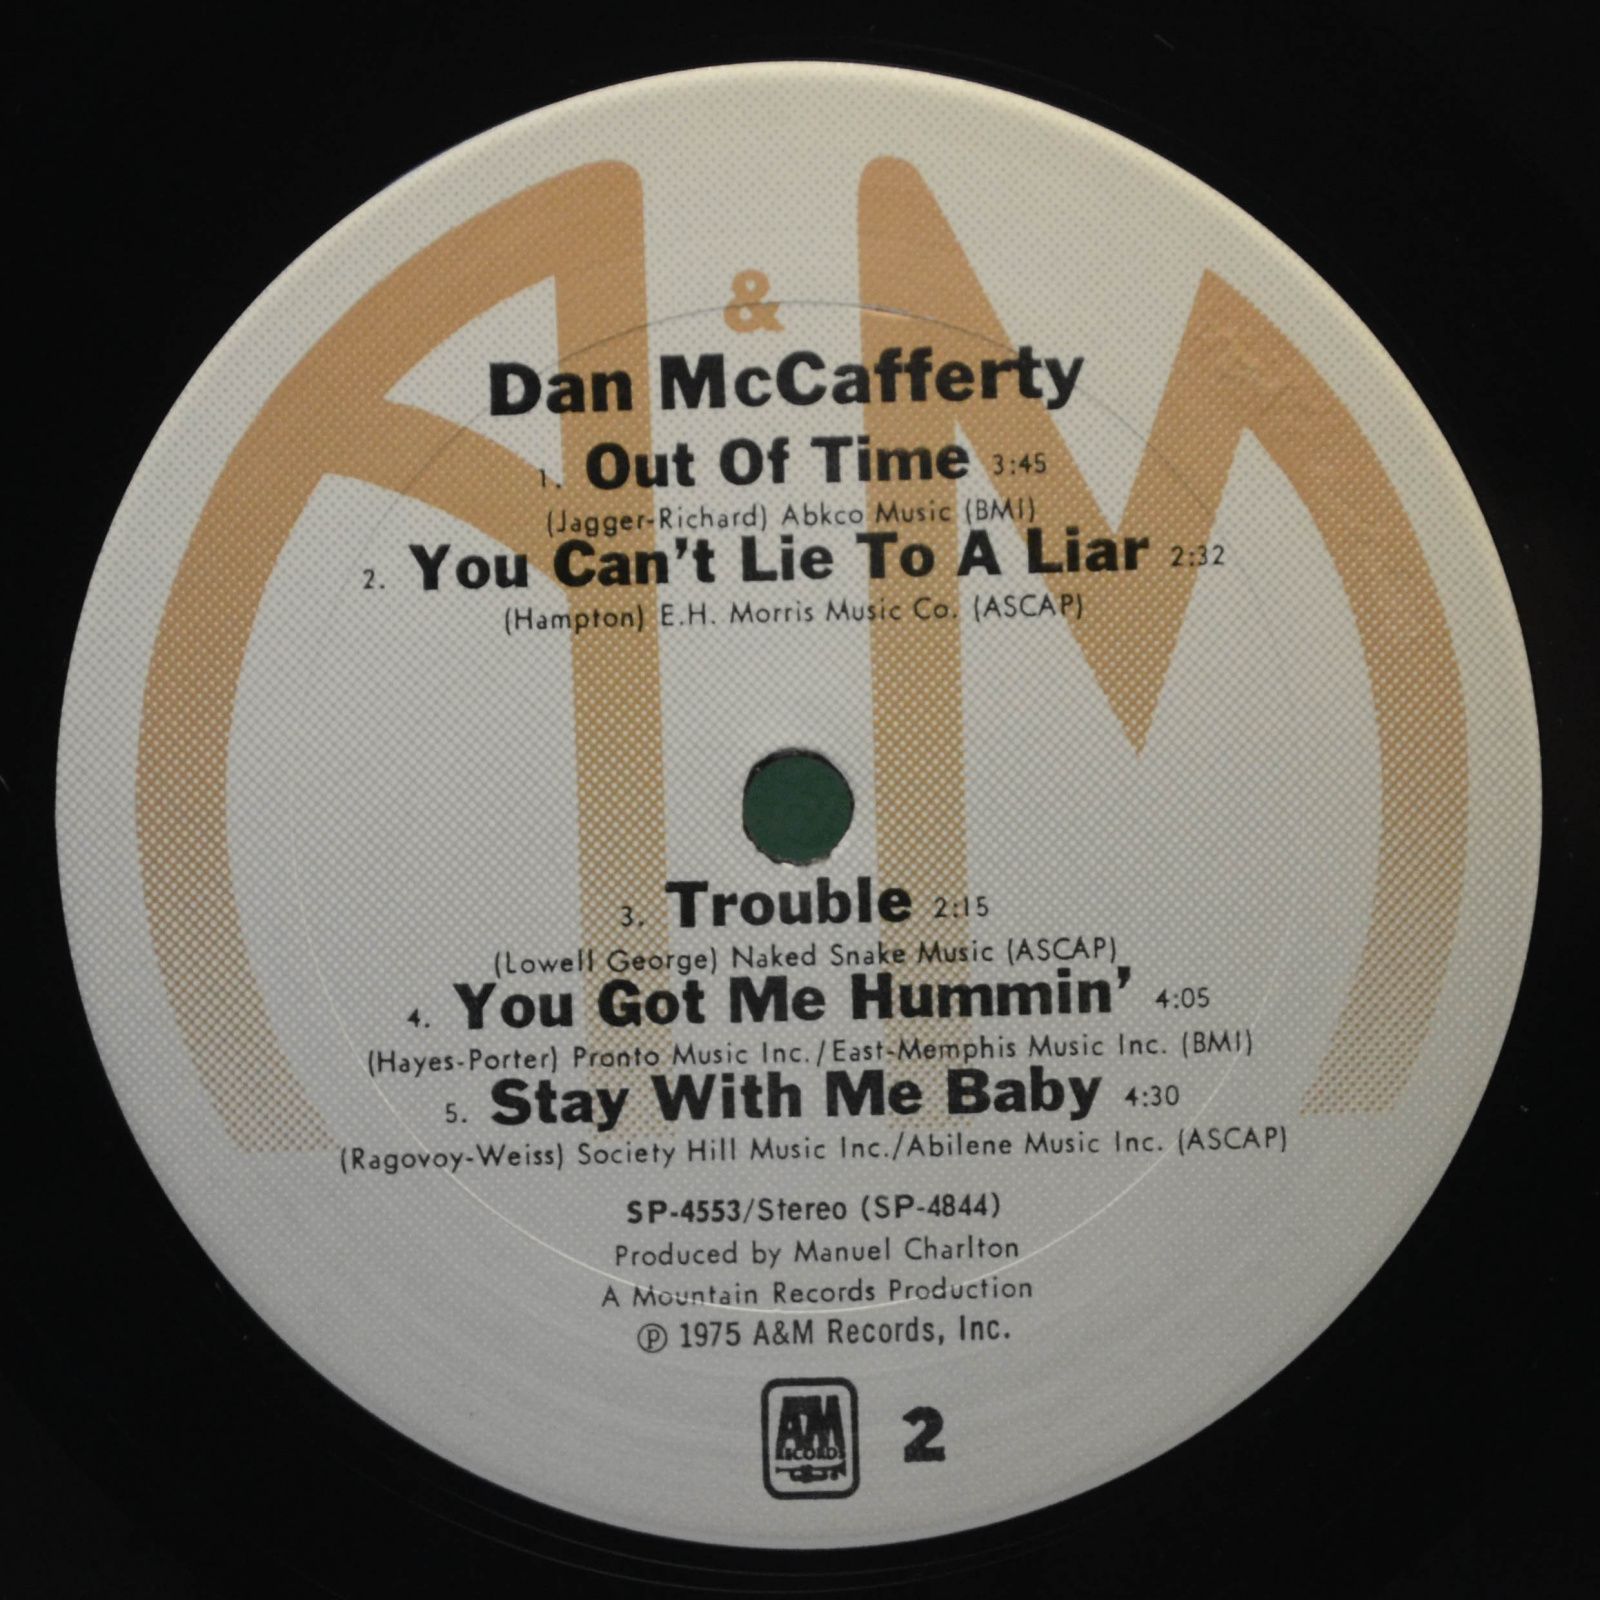 Dan McCafferty — Dan McCafferty (USA), 1975